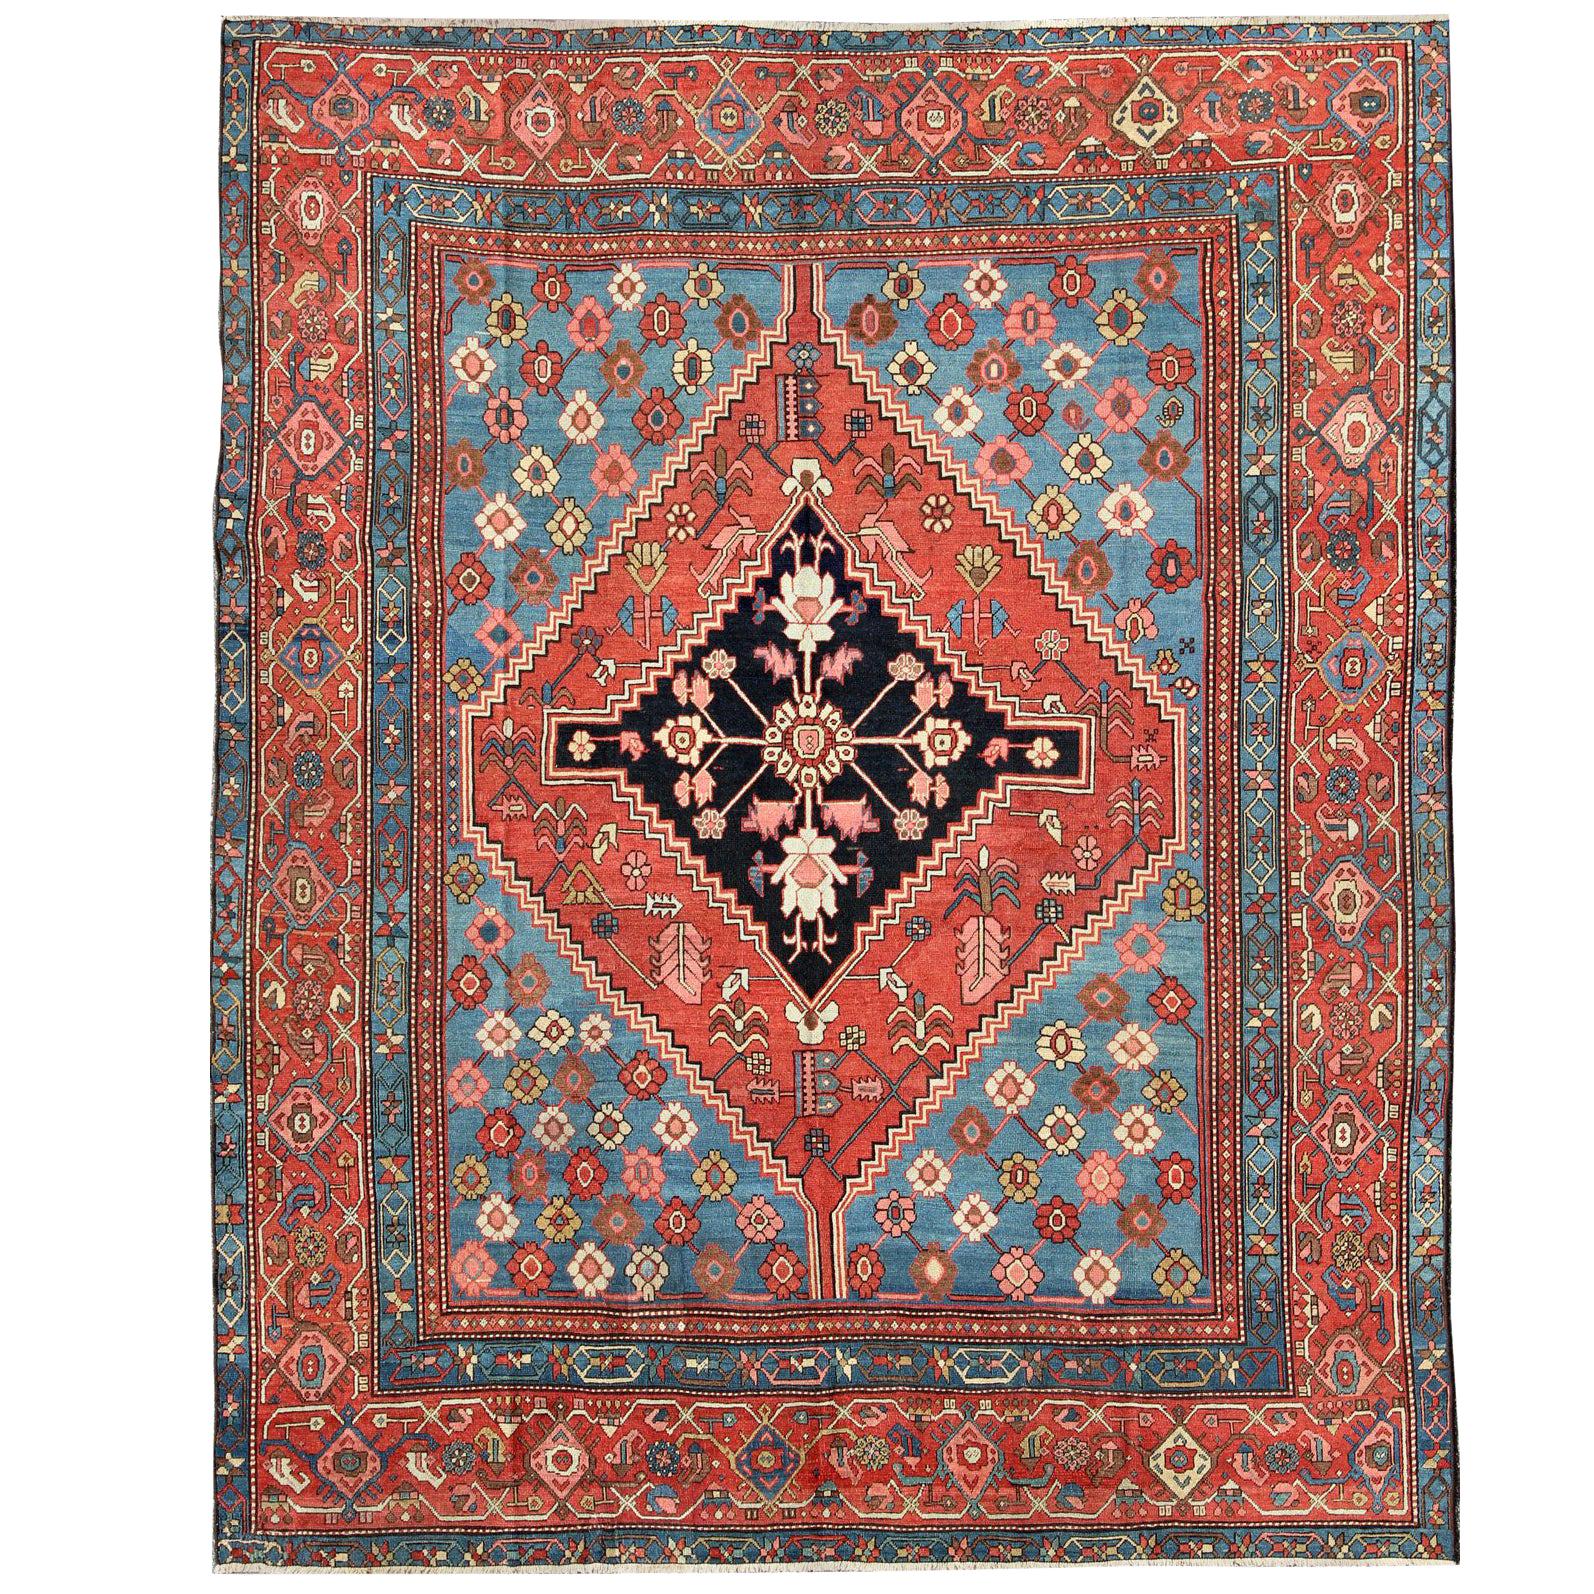 Antique Persian Bakhshaish Carpet with a Unique Geometric Medallion and Design For Sale